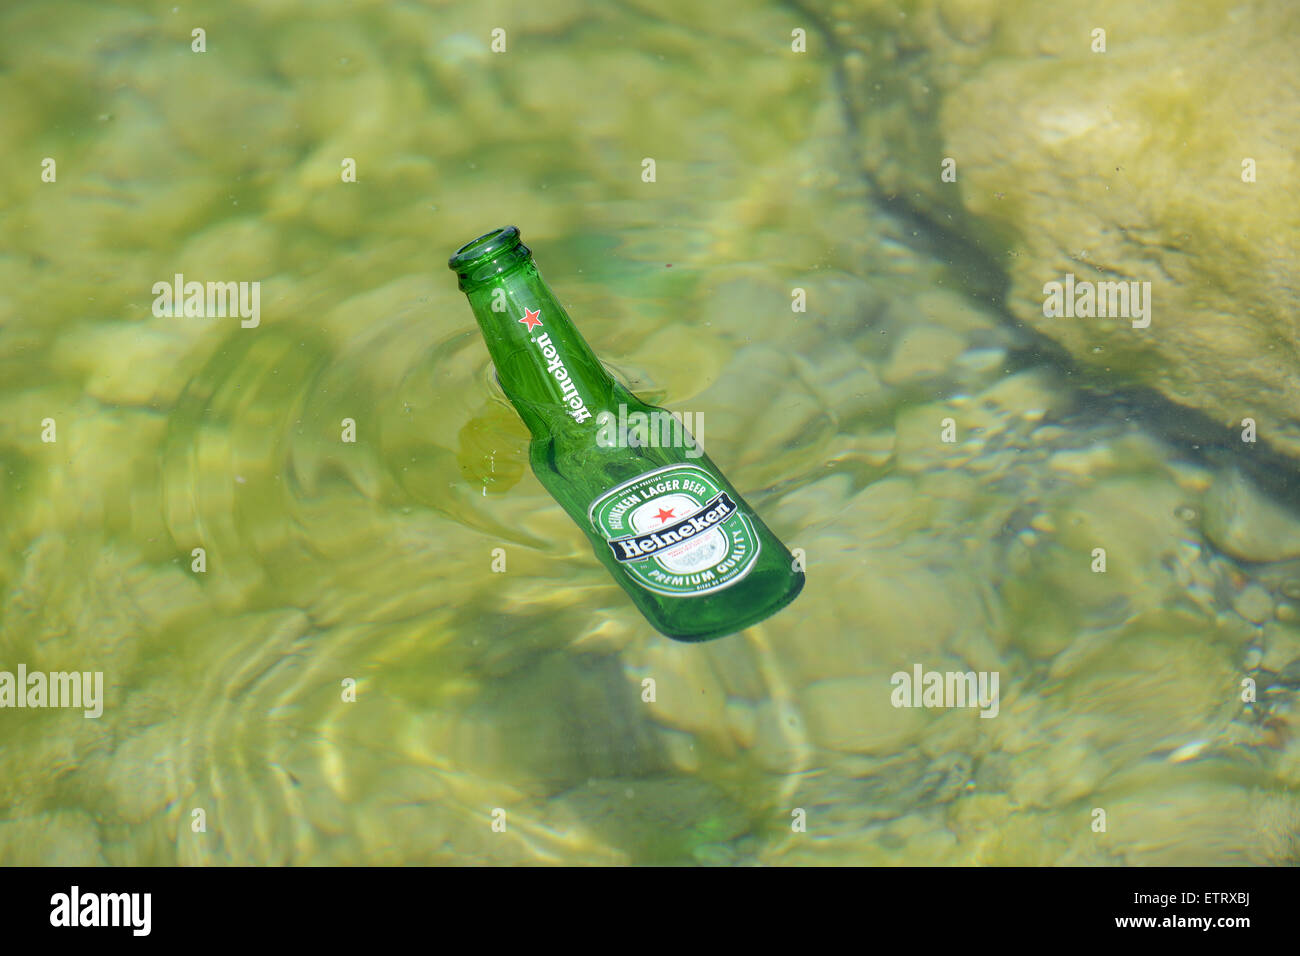 Heineken beer bottle discarded litter in sea or lake rubbish dumped dumping Stock Photo